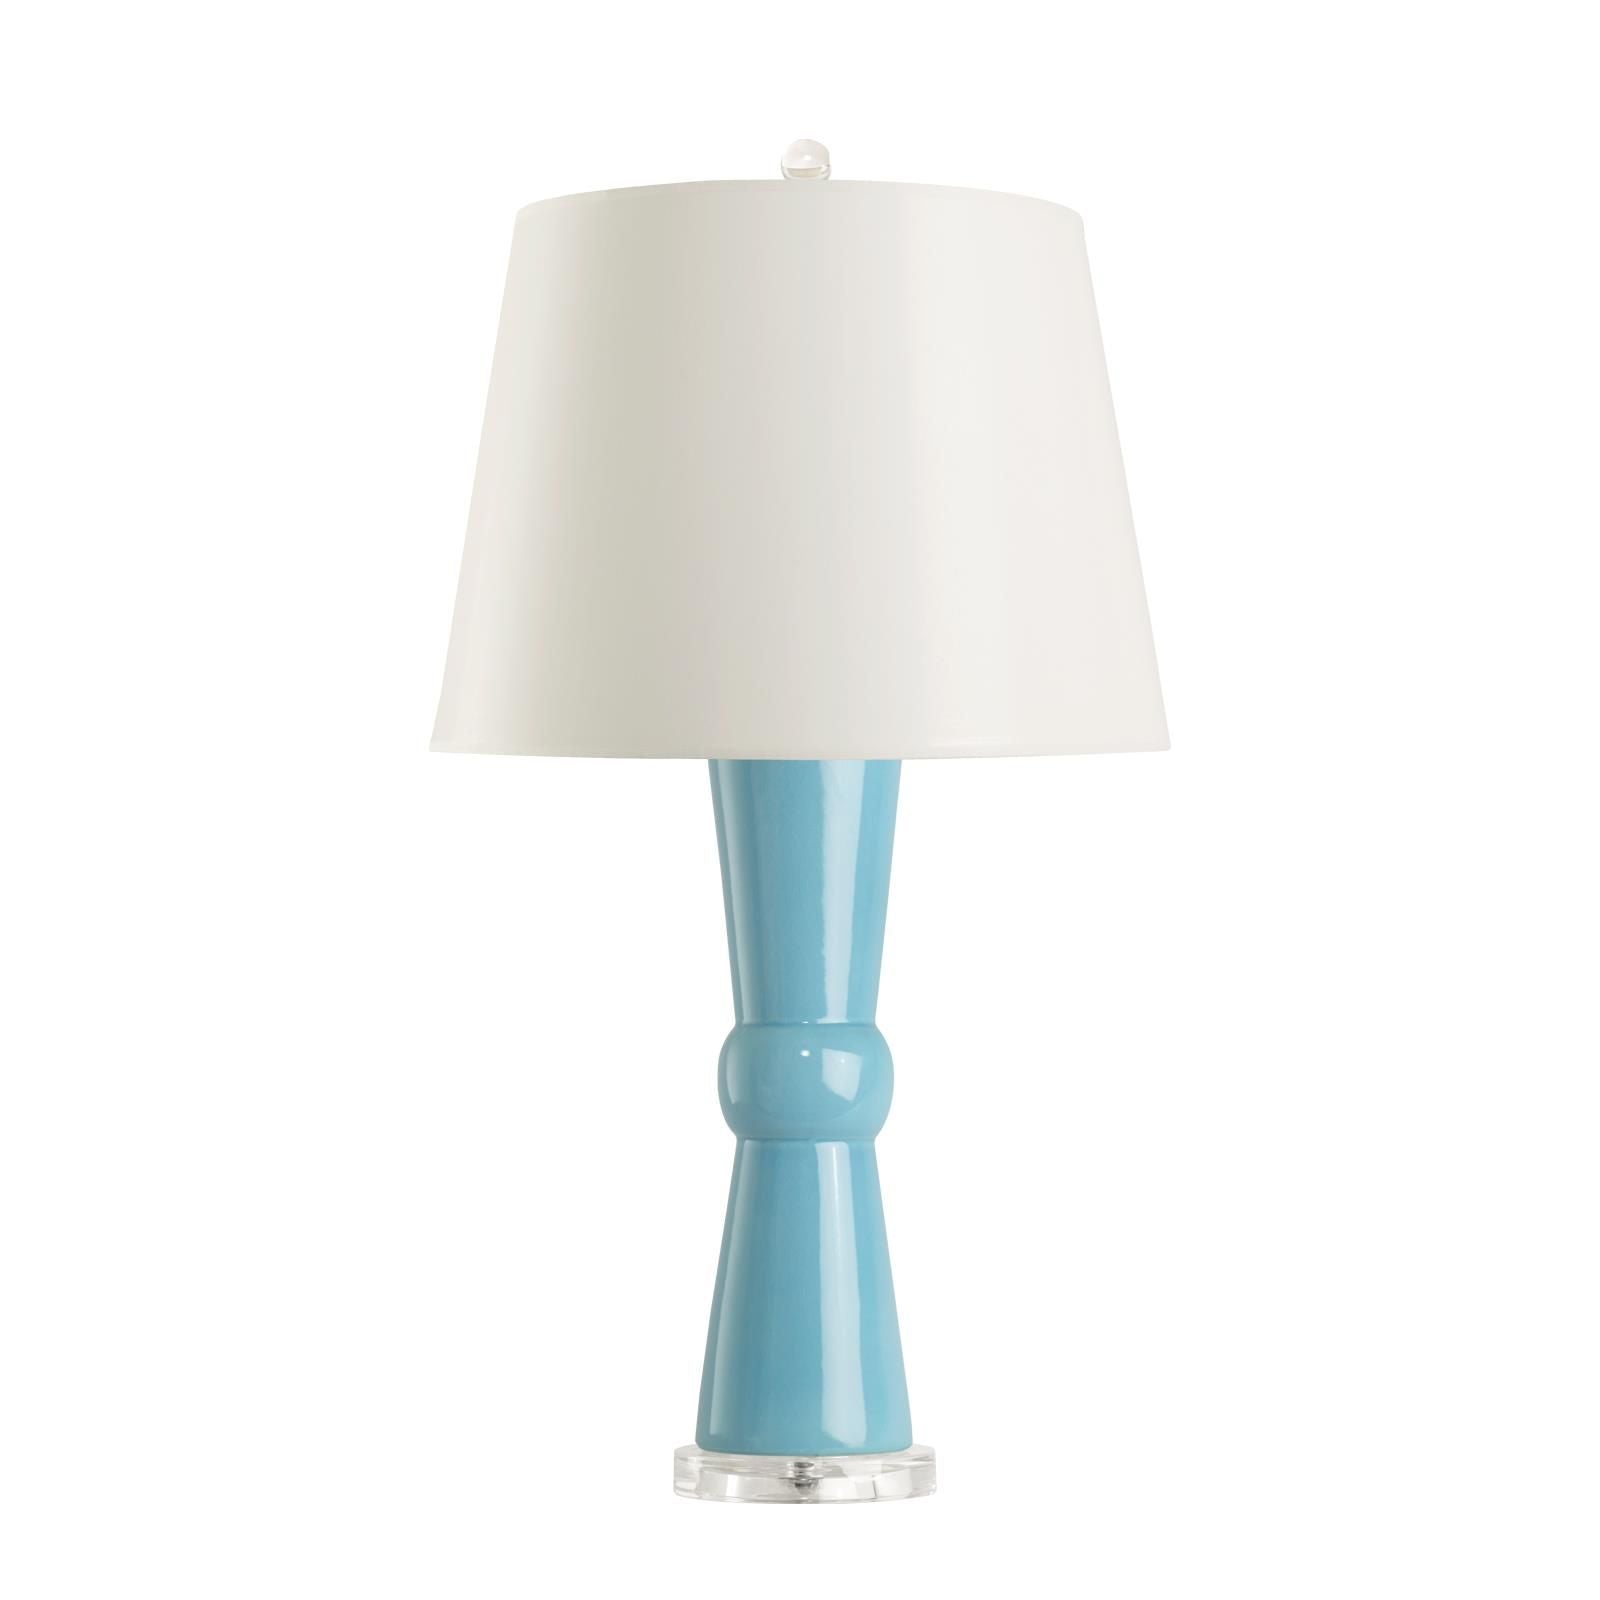 light turquoise ceramic lamp with acrylic base and white shade